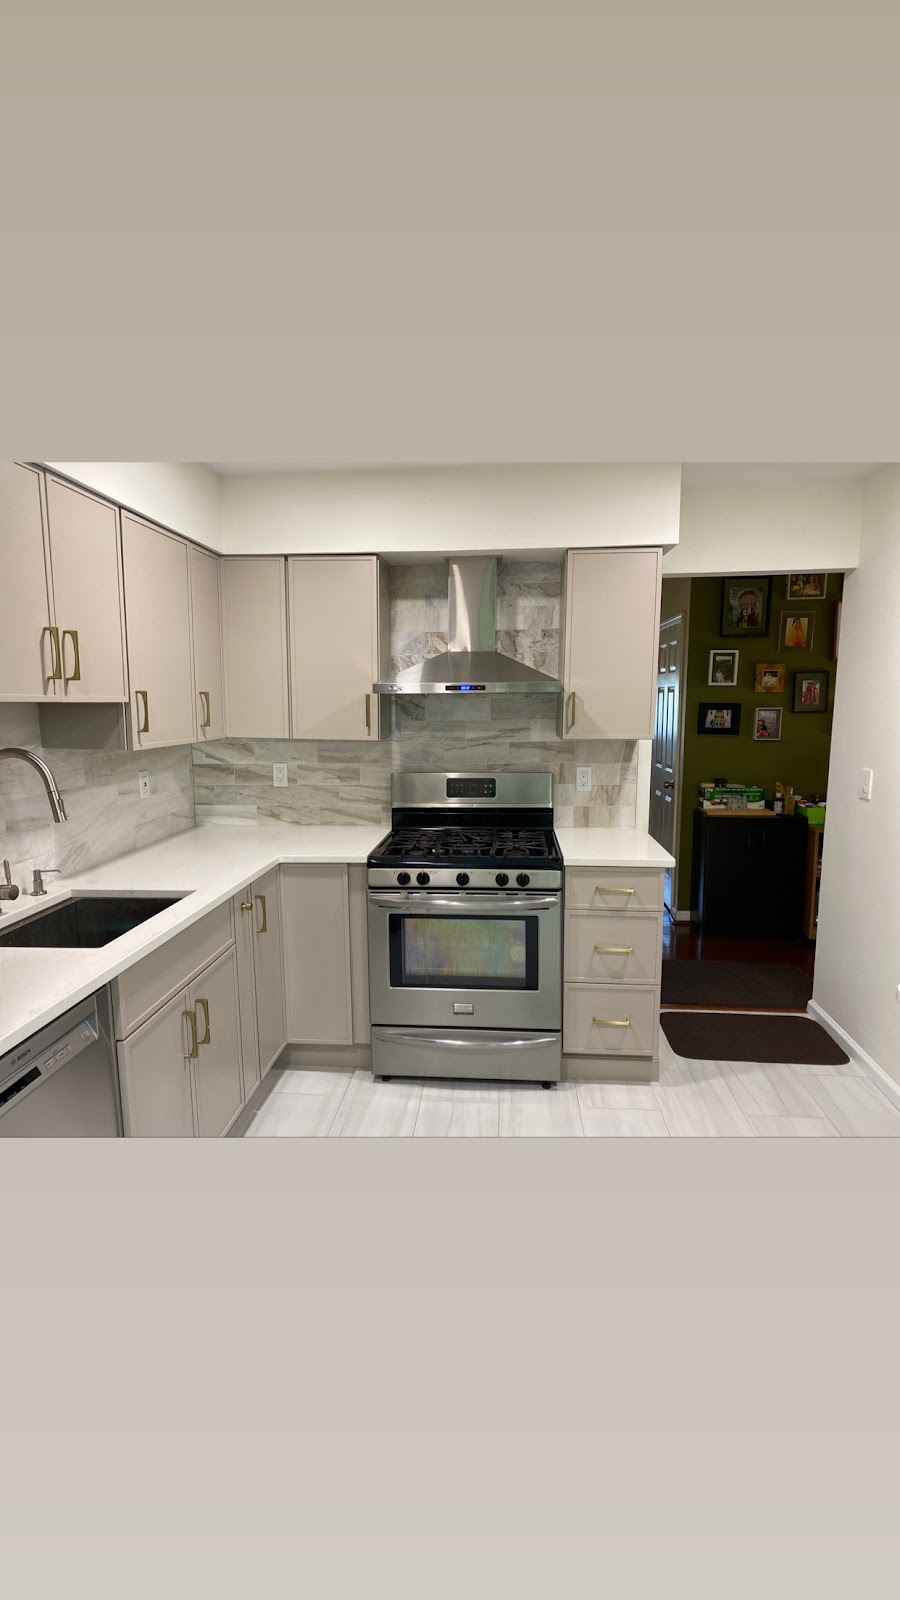 Kitchens Bath And Beyond | 655 Amboy Ave Suite D403, Woodbridge Township, NJ 07095 | Phone: (732) 326-2515